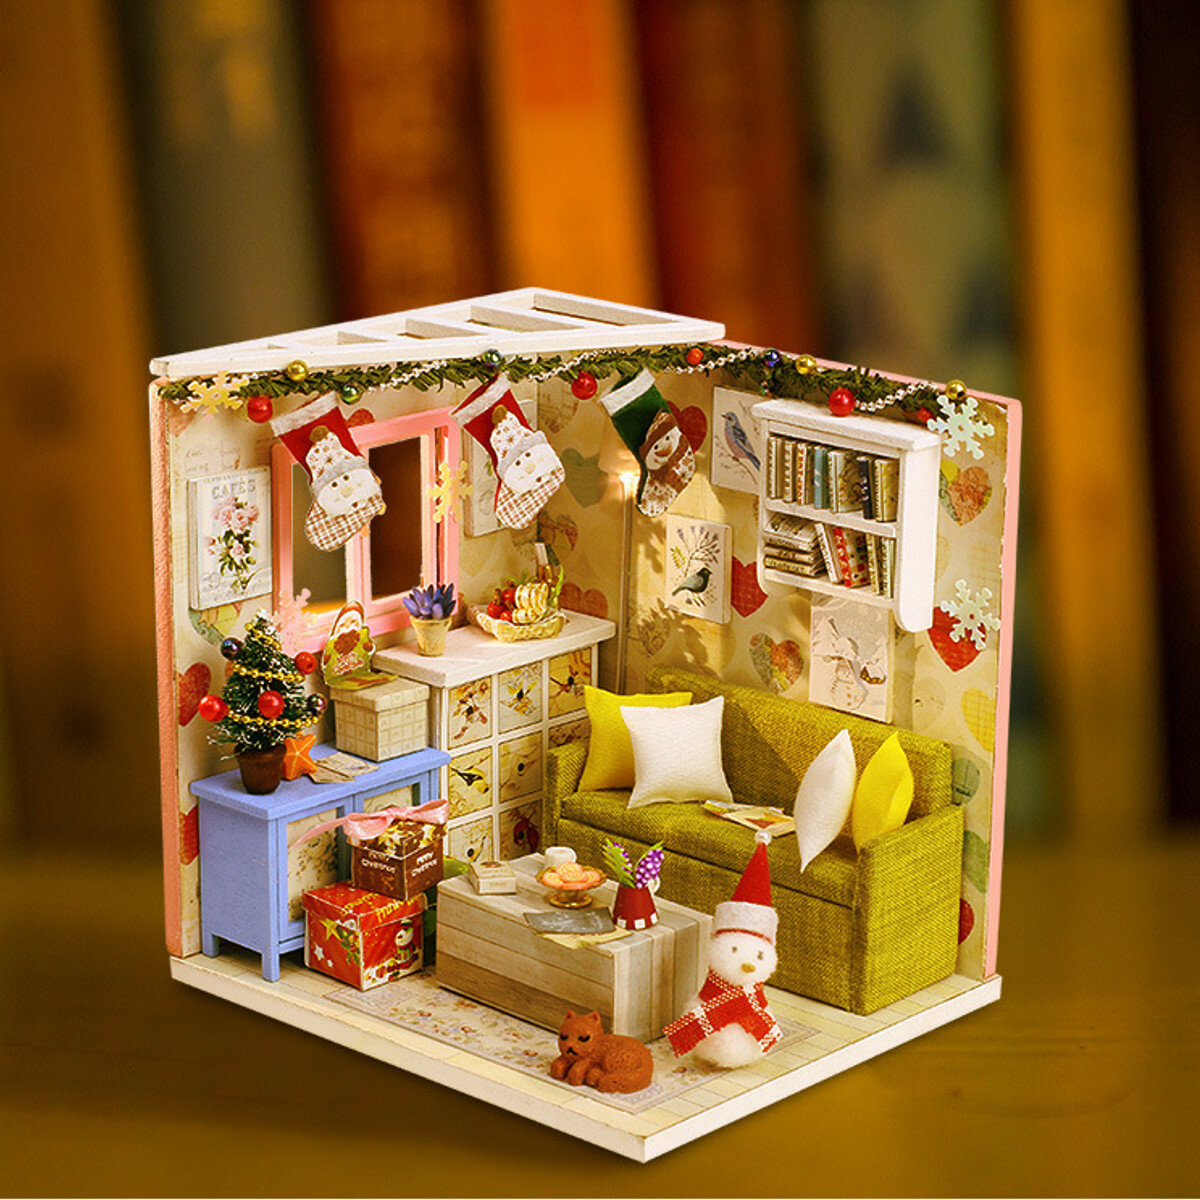 Iiecreate DIY Doll House House Handmade Assembled Educational Toy Art House Christmas Gift Creative 